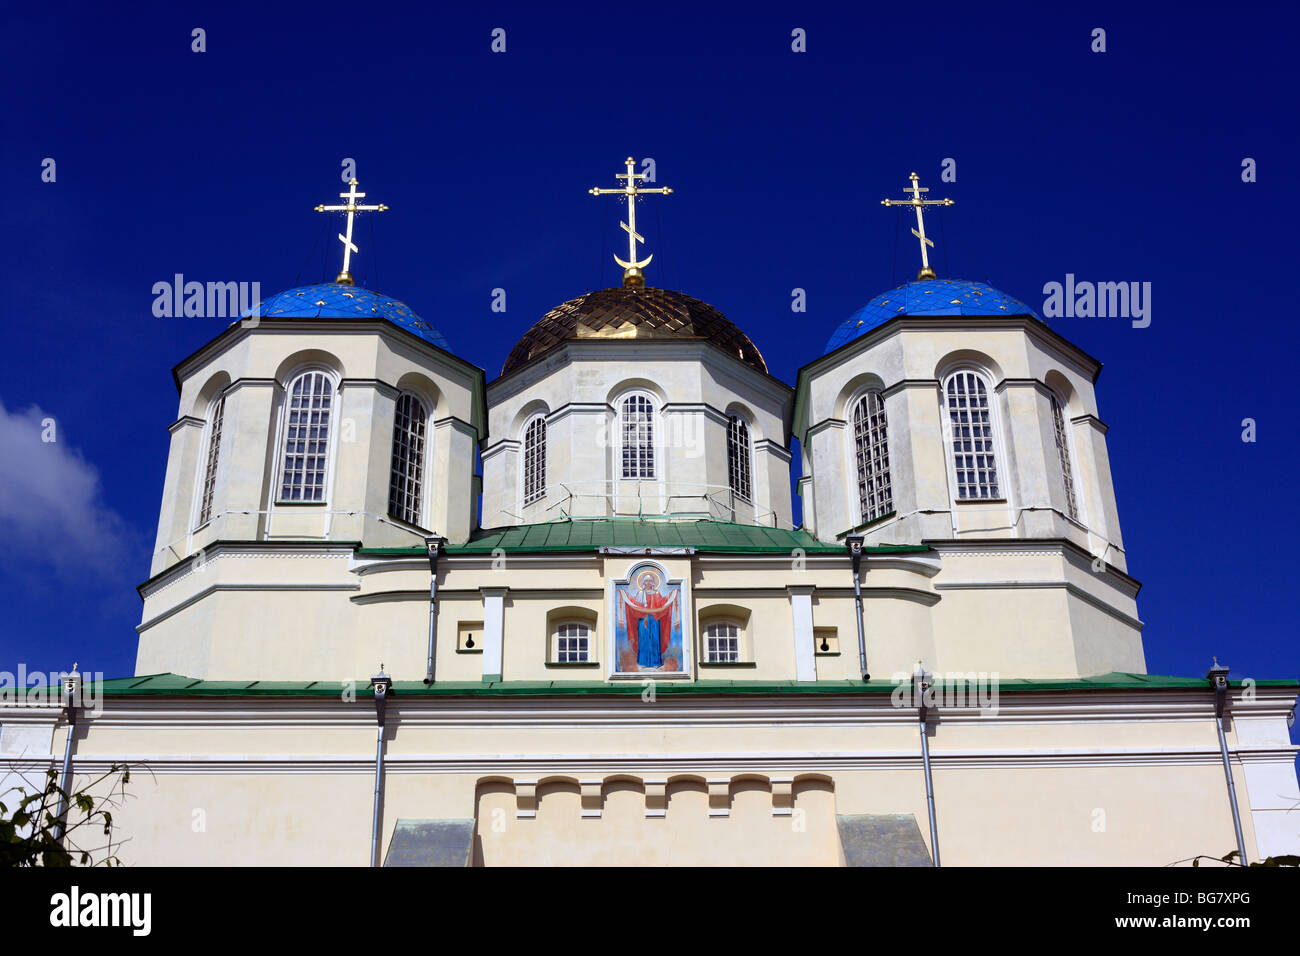 St. Trinity monastery, Mezhirich, Sumy oblast, Ukraine Stock Photo